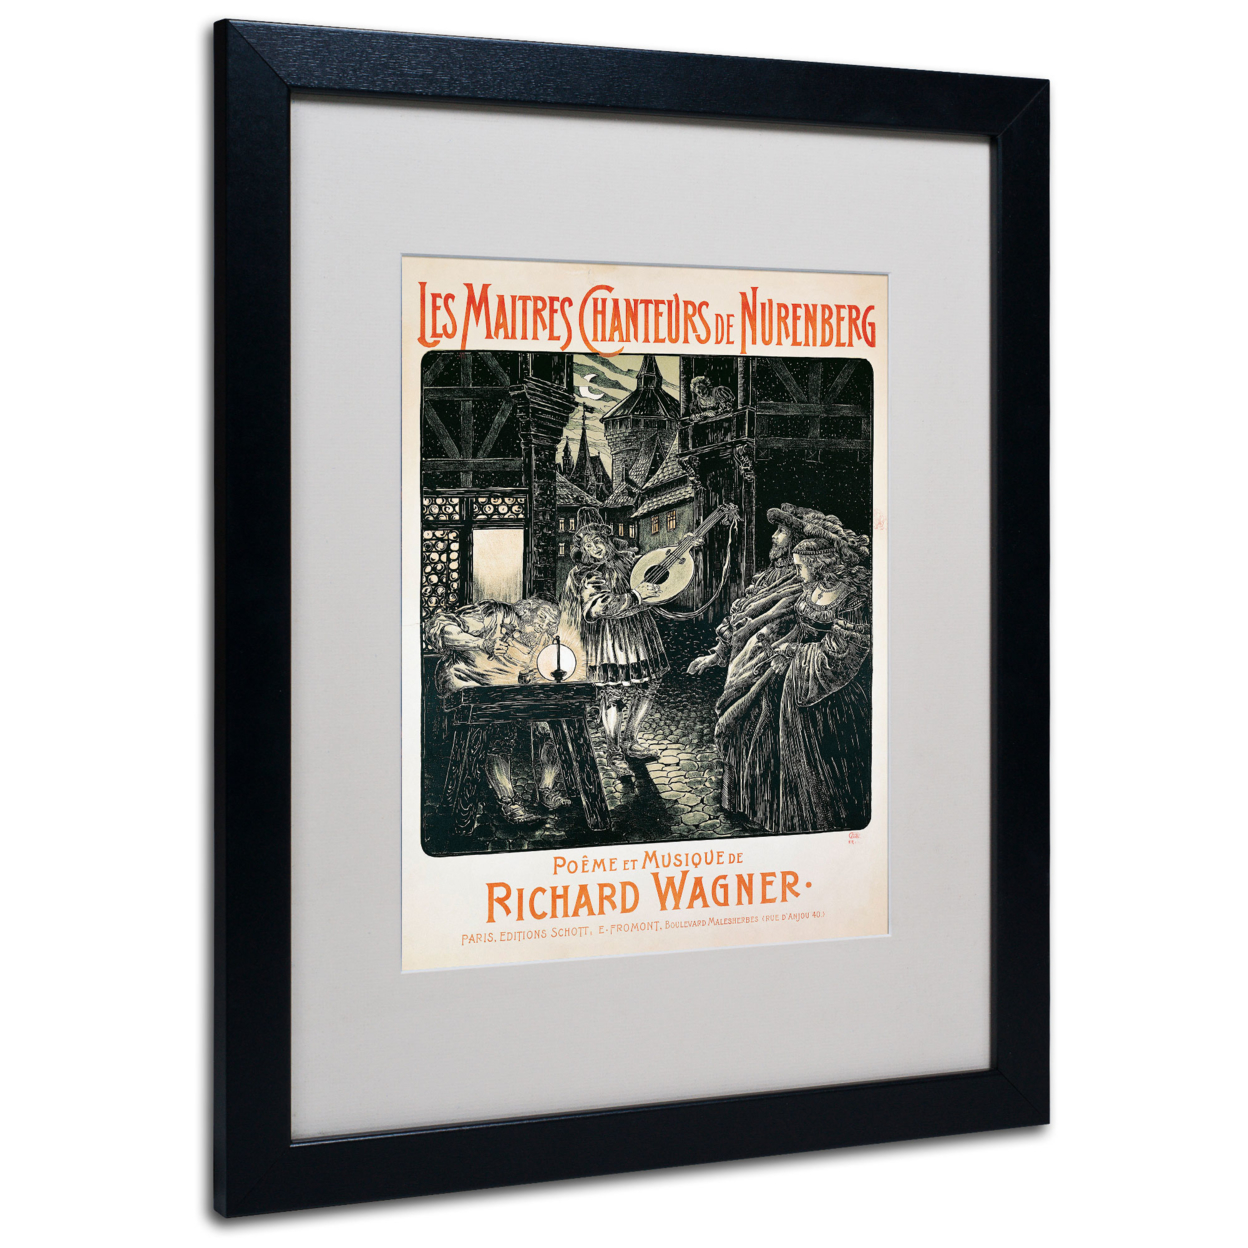 Richard Wagner 'Mastersingers' Black Wooden Framed Art 18 X 22 Inches